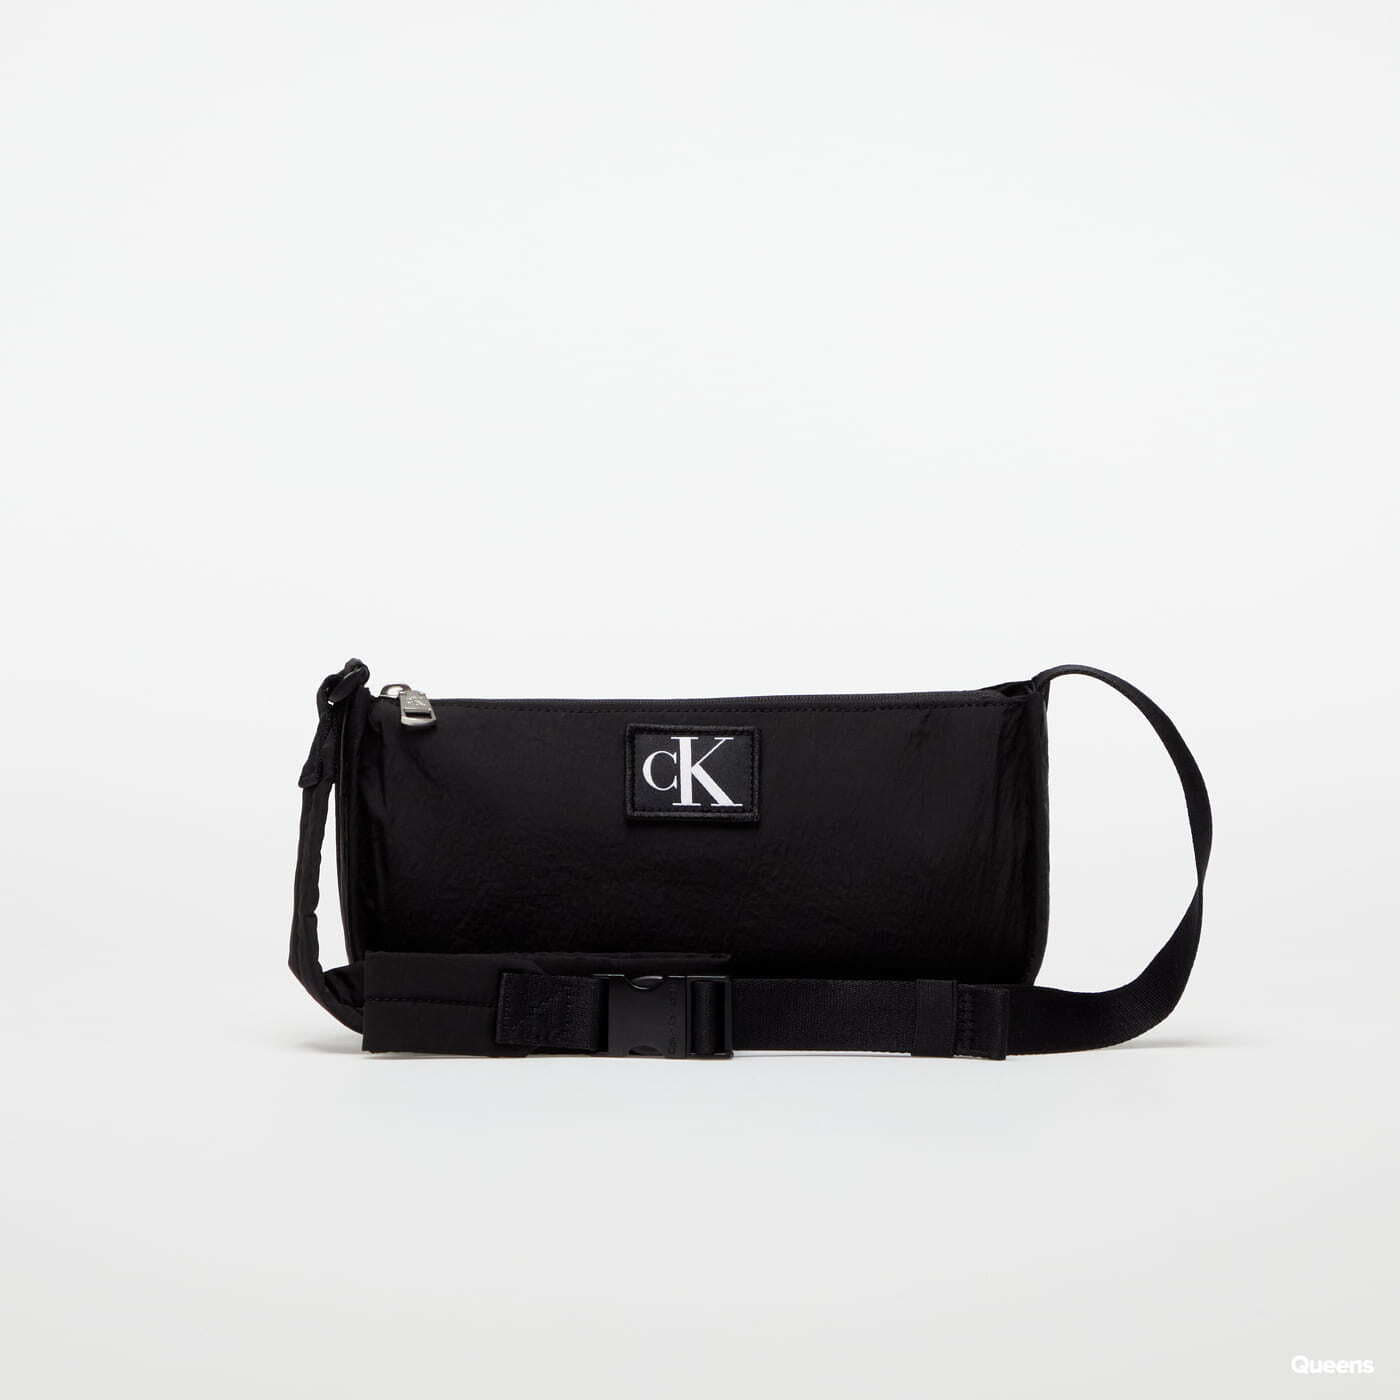 Calvin Klein Crossbody bag in black